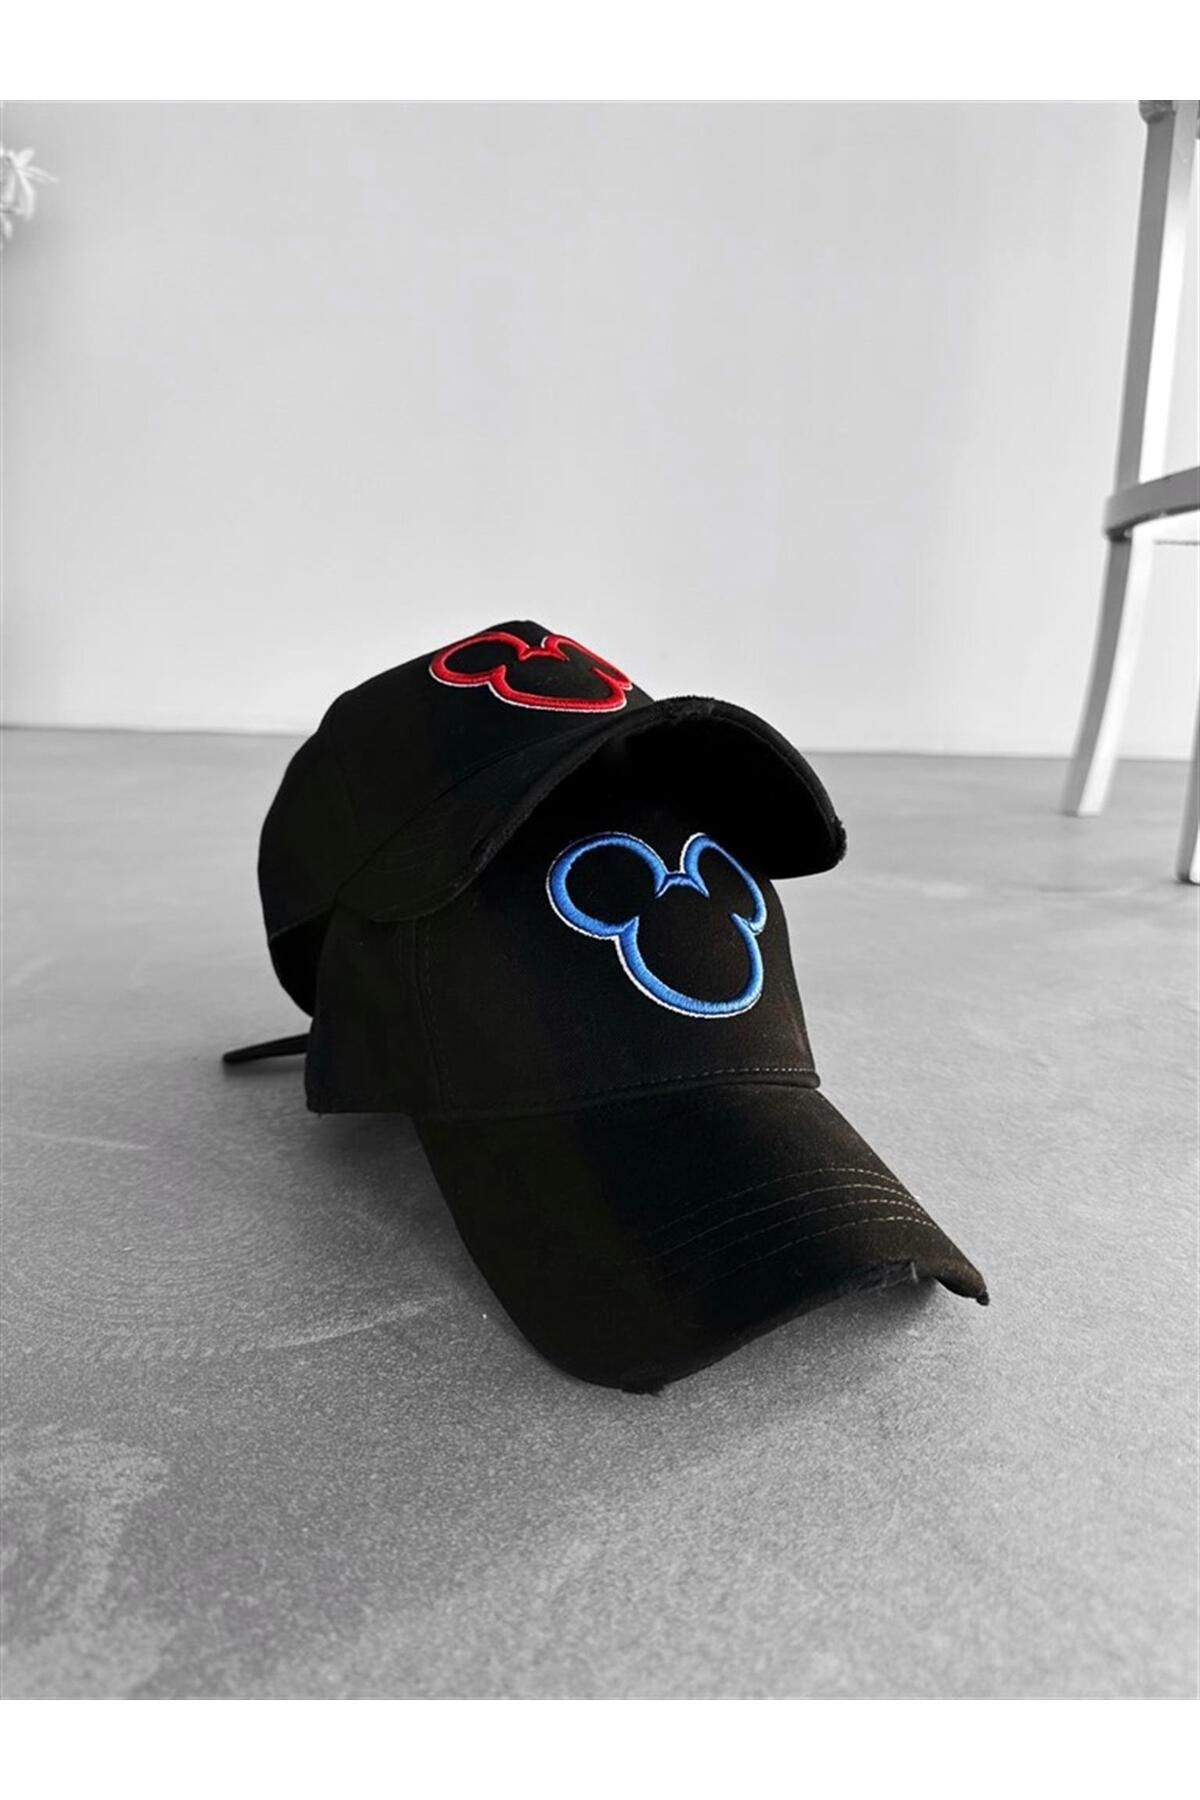 ablukaonline Mickey Mouse Silüet Şapka Mavi SPK.0001